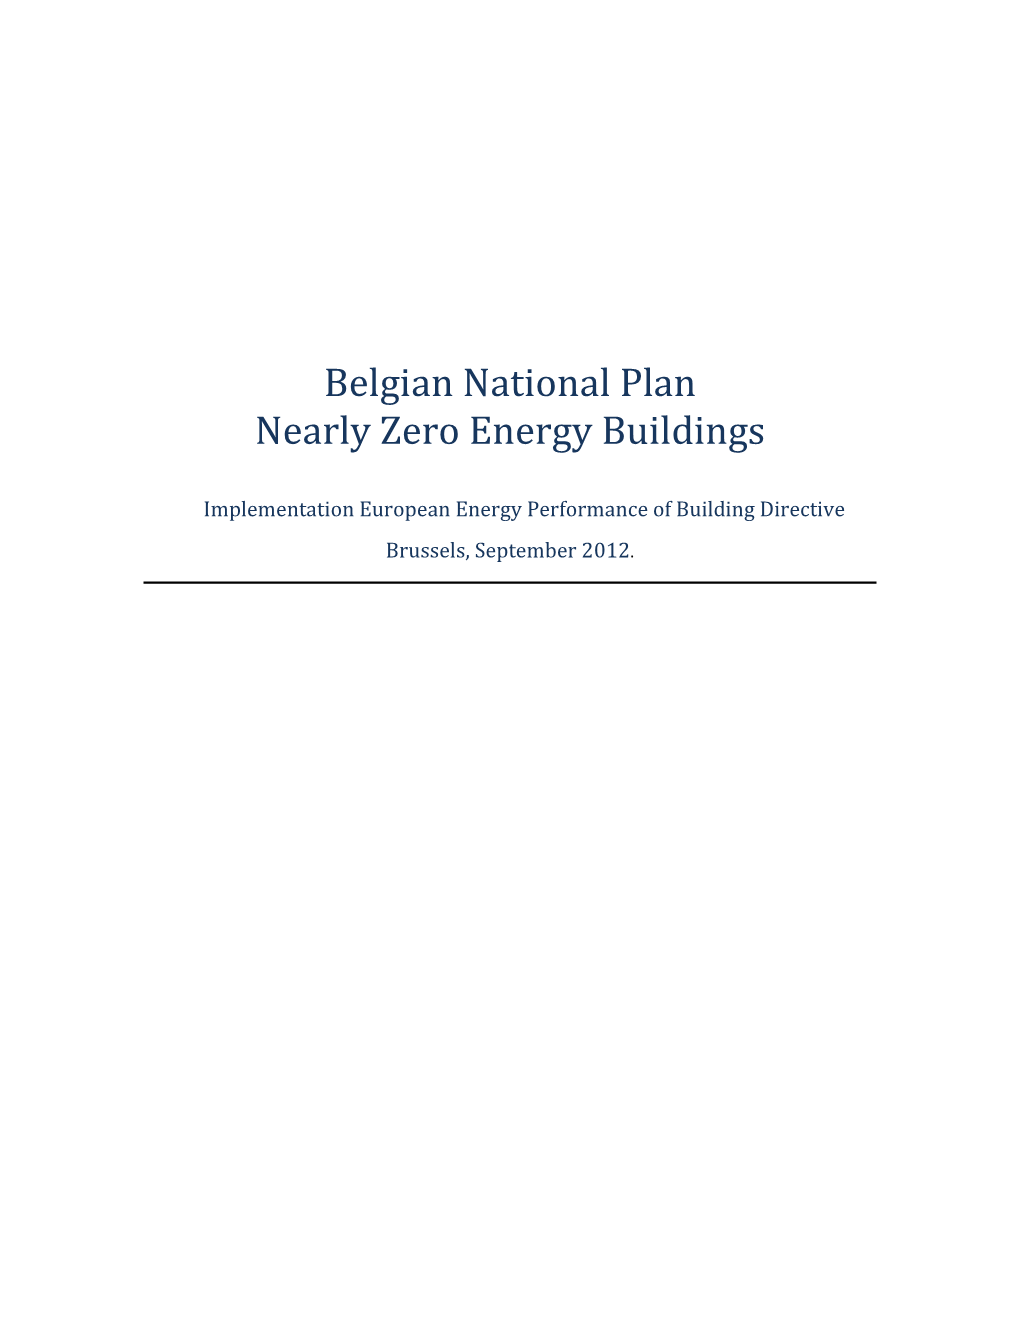 Belgian National Plan NZEB 28 Sept 2012 Final Version Corrected